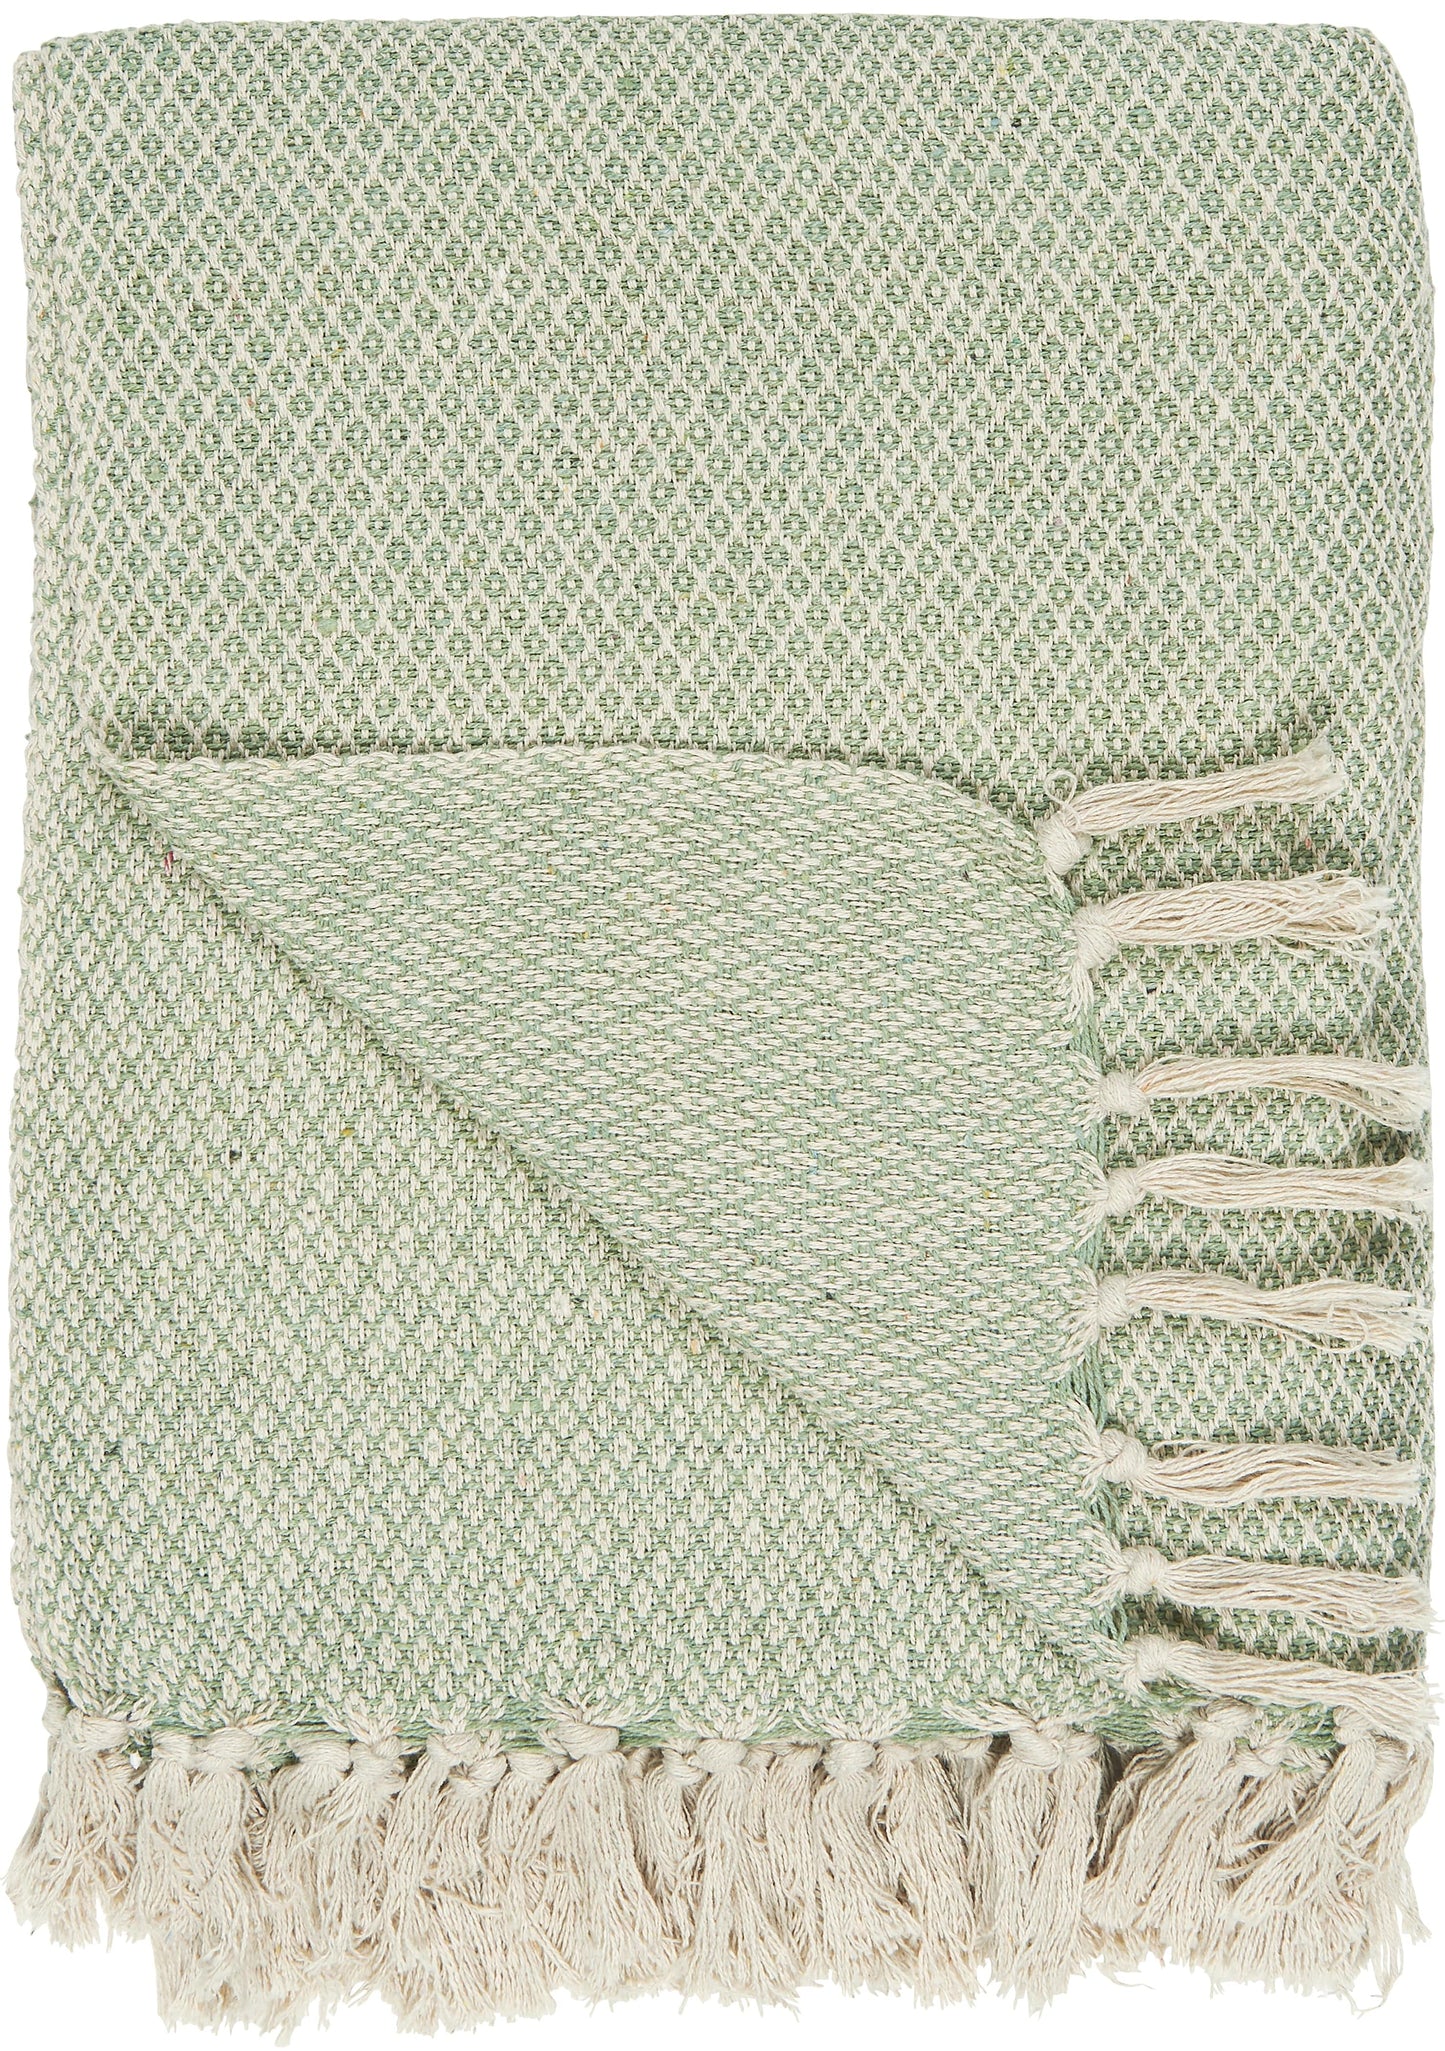 Ib Laursen Plaid Plaid - Creme/grønt rudemønster (130 x 160 cm) otherstuff